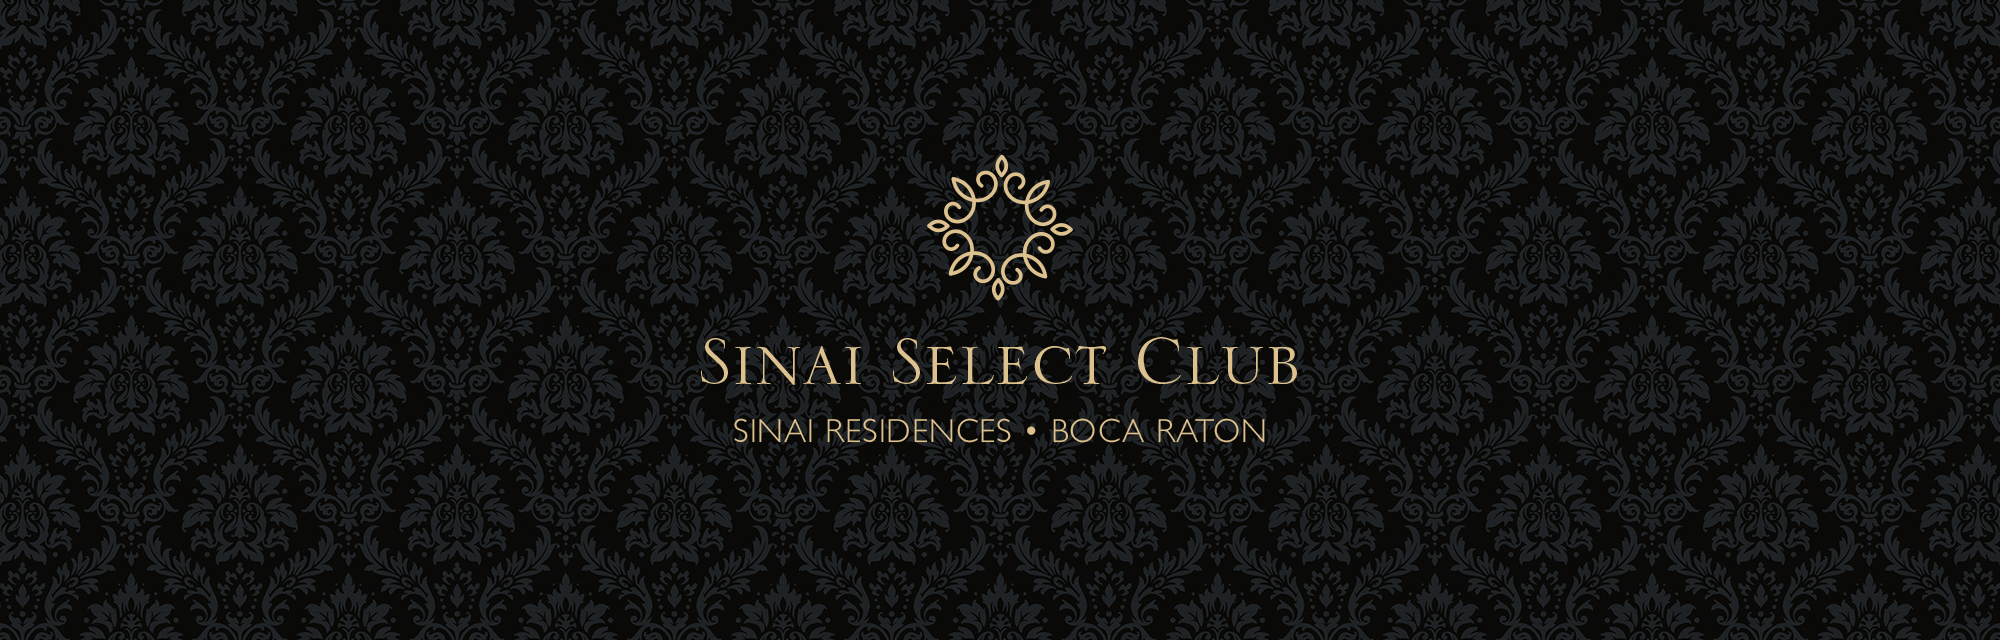 Sinai Select Club Member Sinai Residences